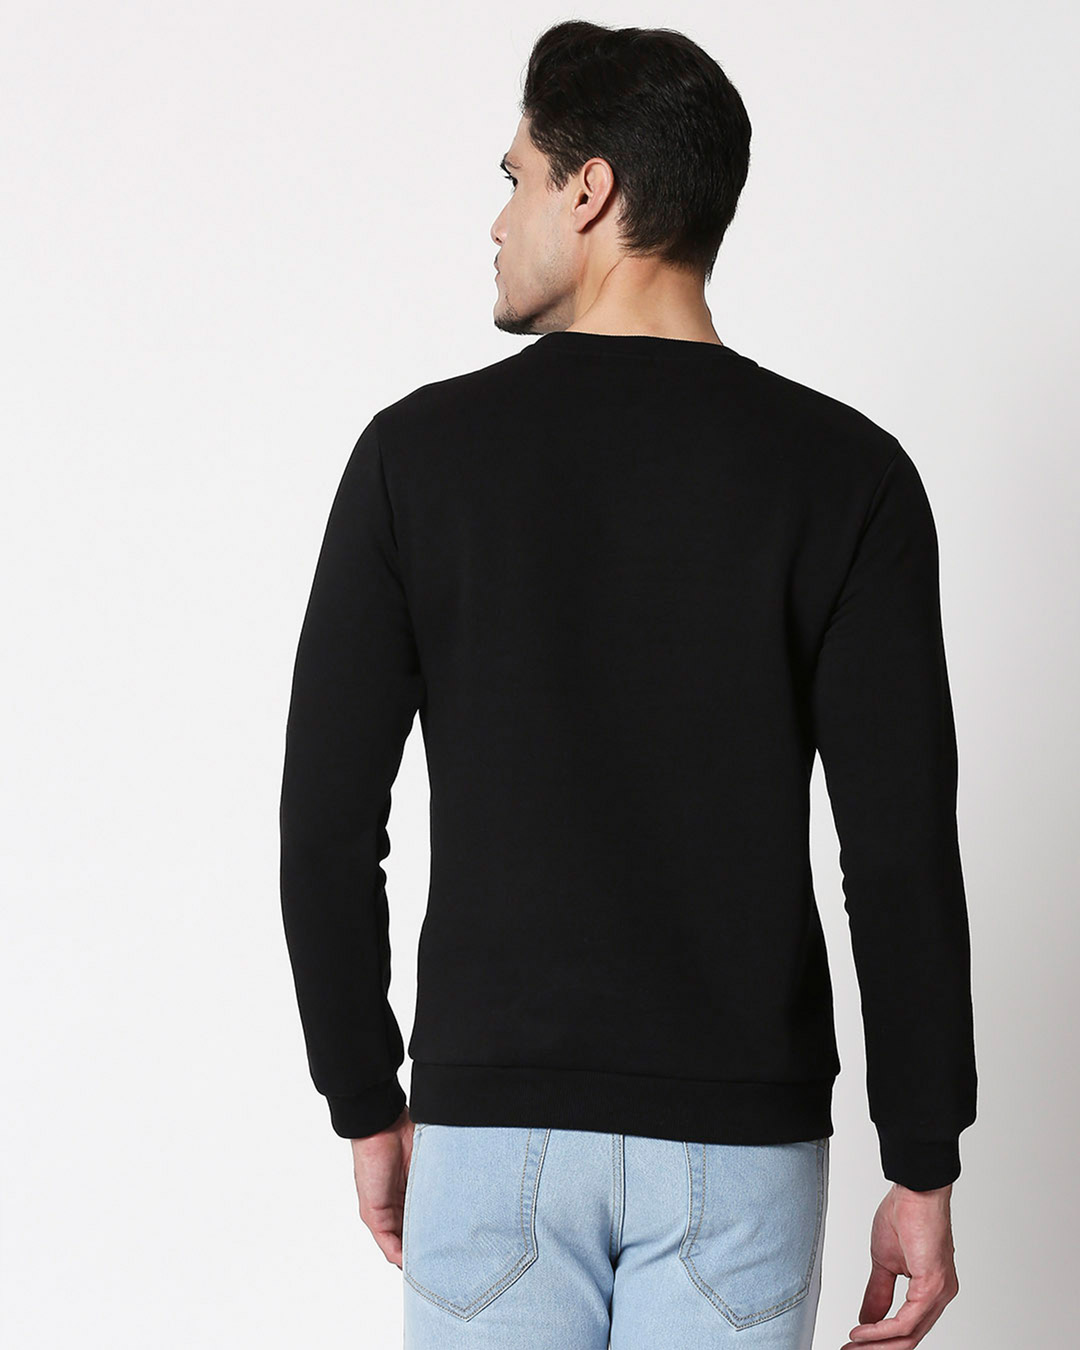 Shop Hardest Climb Fleece Sweatshirt Black-Back